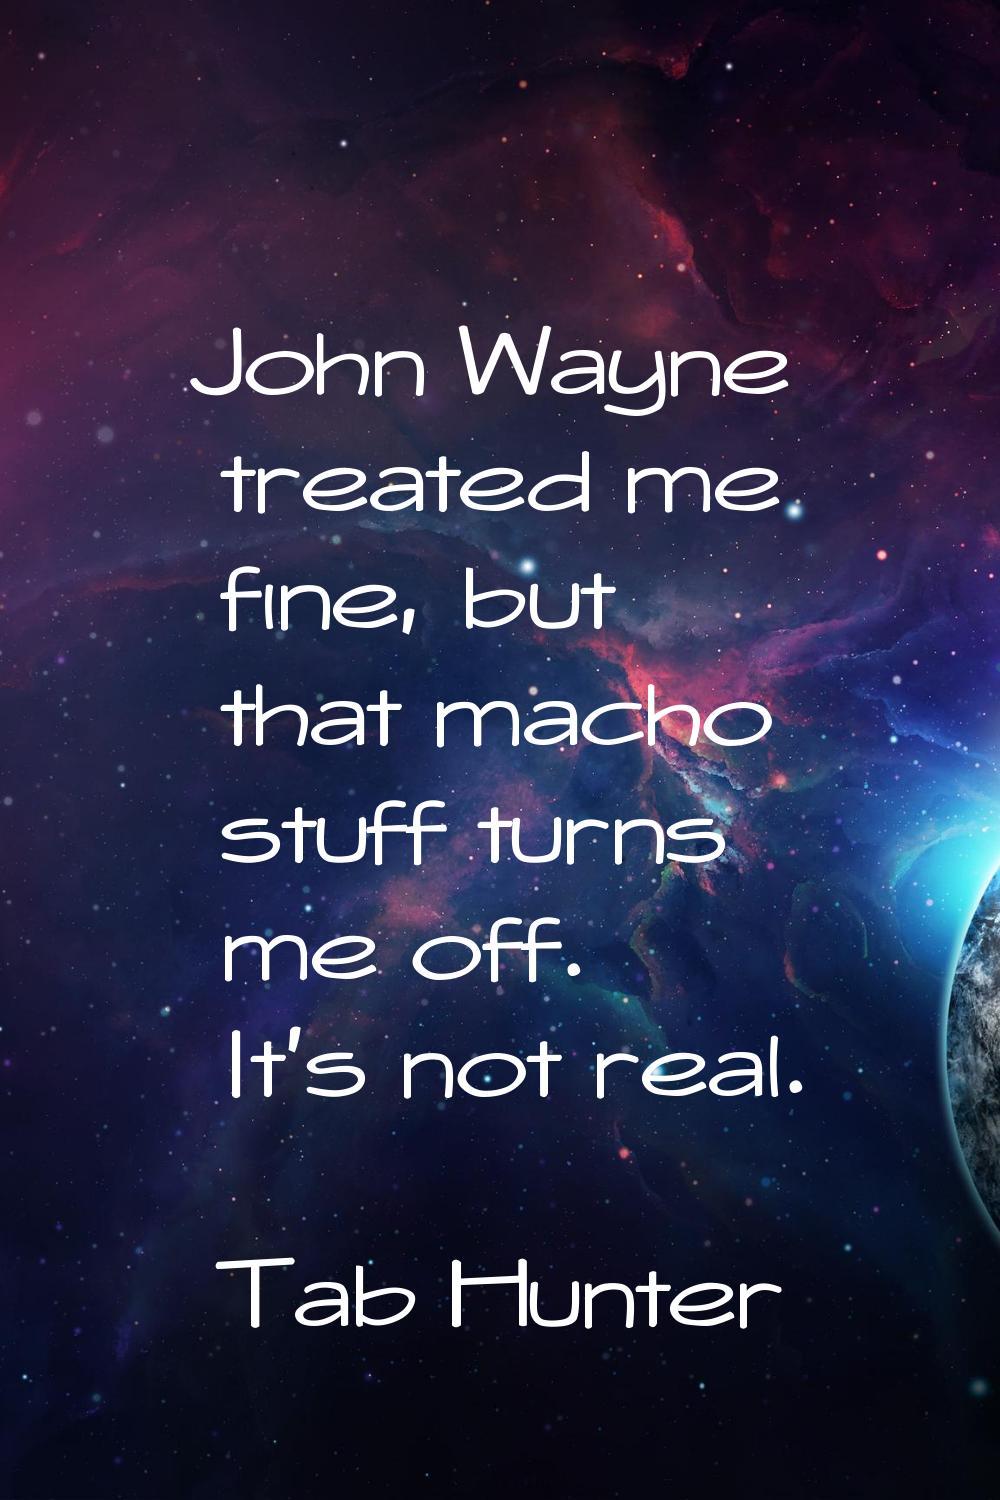 John Wayne treated me fine, but that macho stuff turns me off. It's not real.